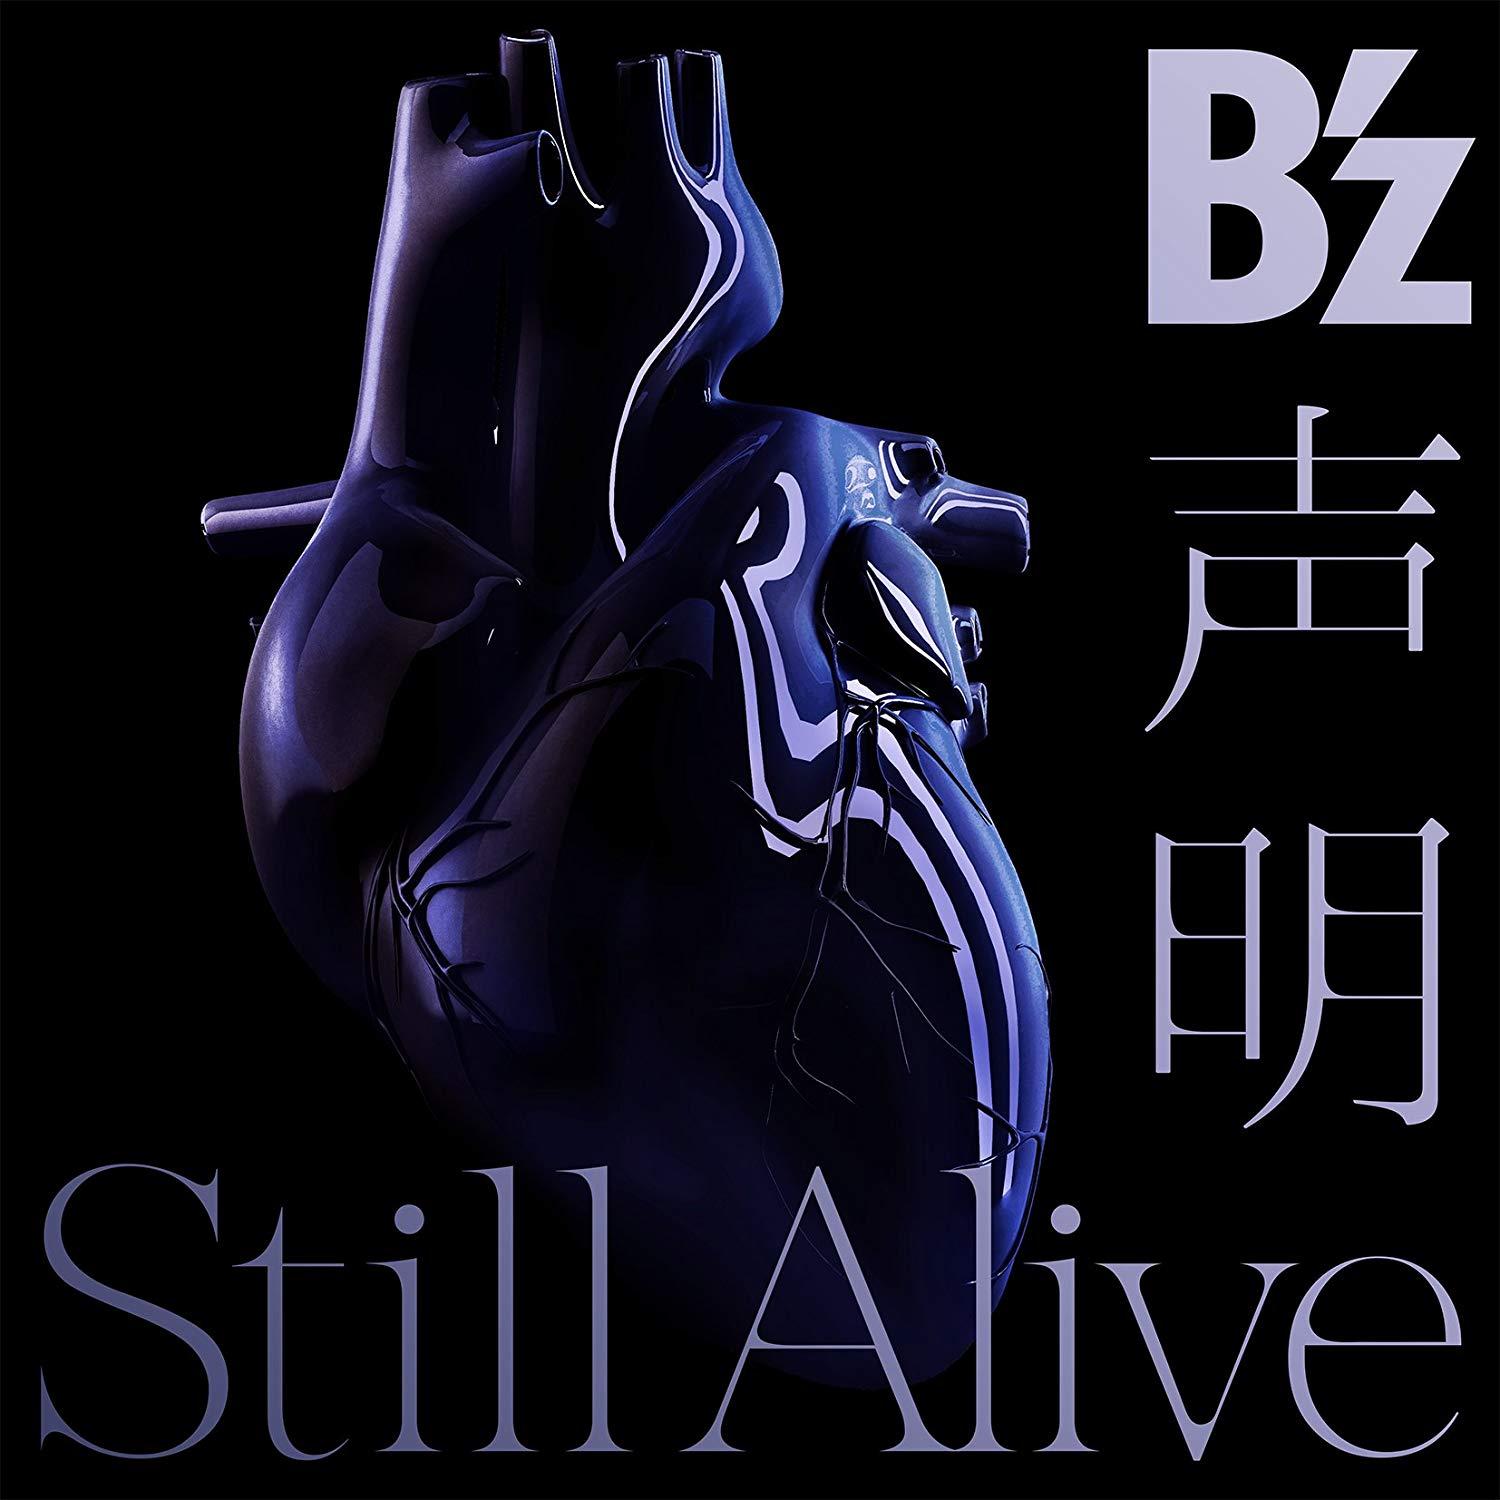 /Still Alive() B z VERMILLION RECORDS